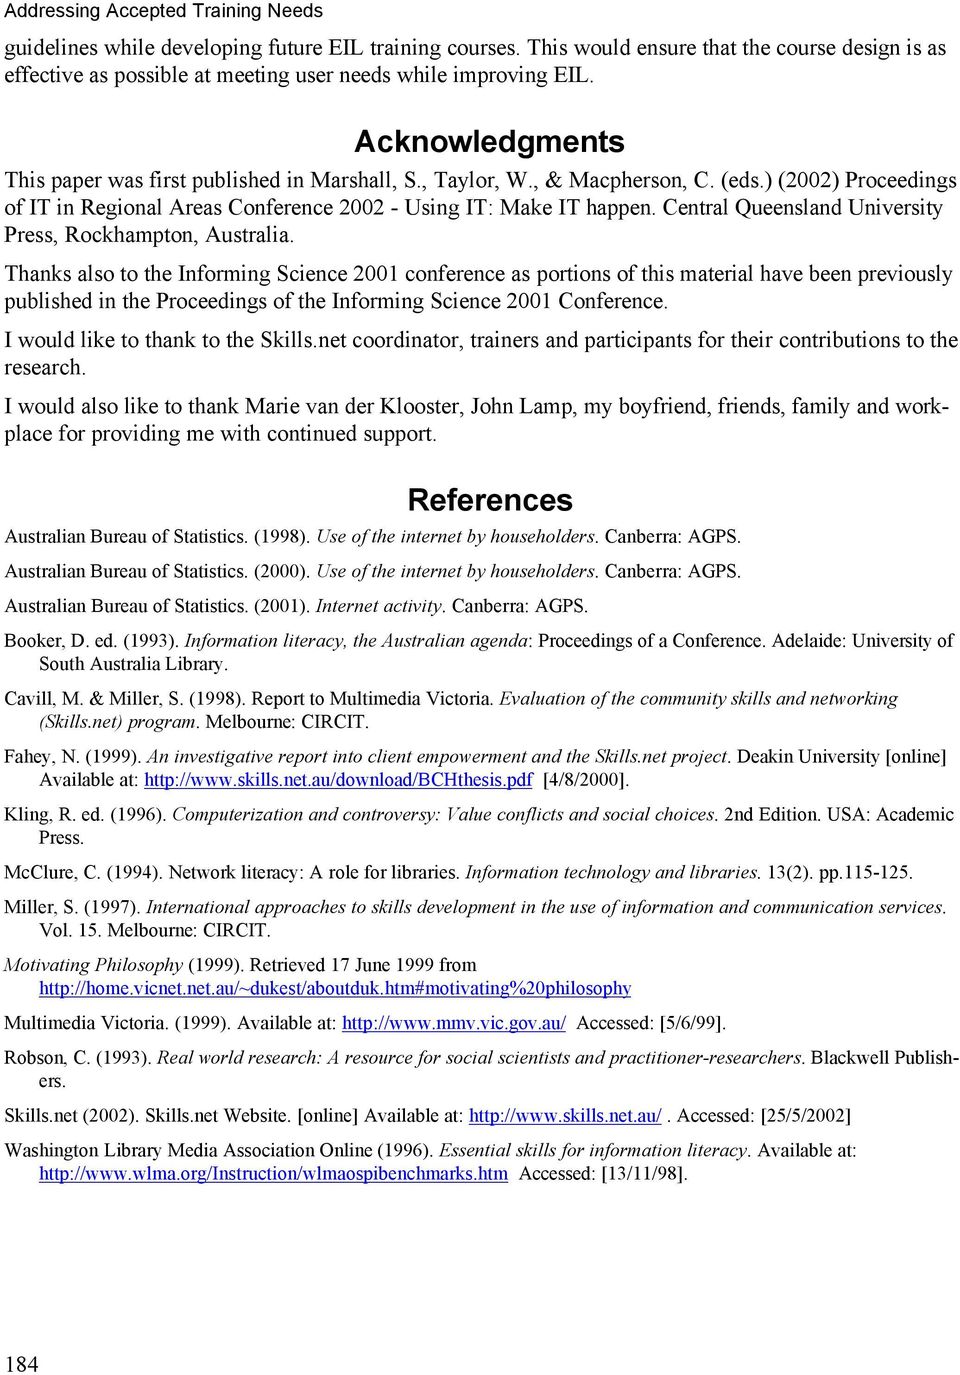 , & Macpherson, C. (eds.) (2002) Proceedings of IT in Regional Areas Conference 2002 - Using IT: Make IT happen. Central Queensland University Press, Rockhampton, Australia.